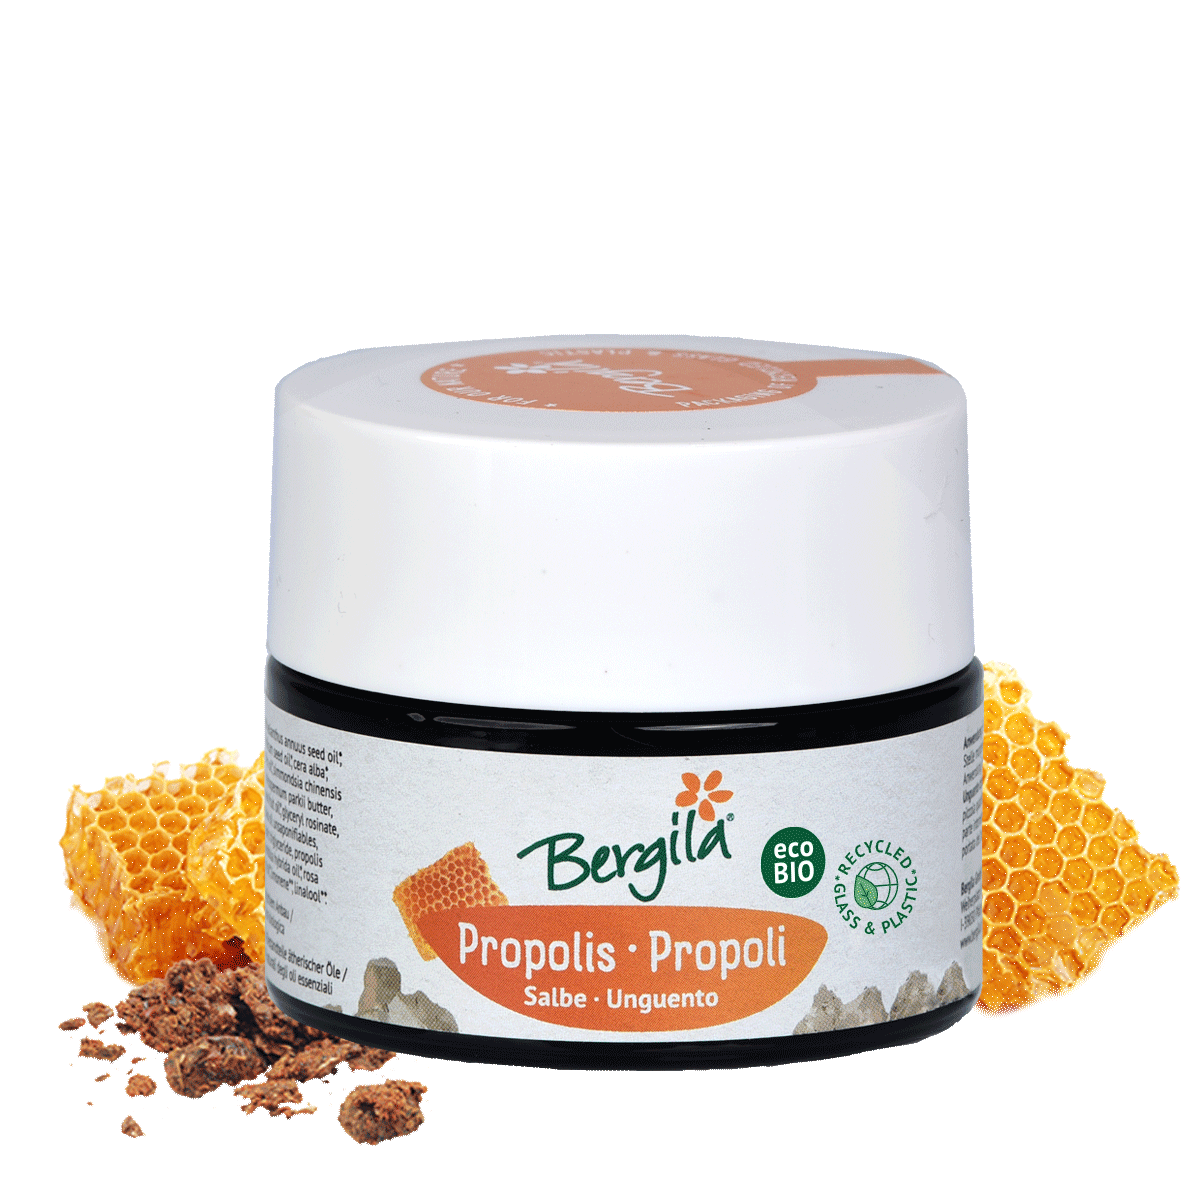 Propolis ointment Ecobio